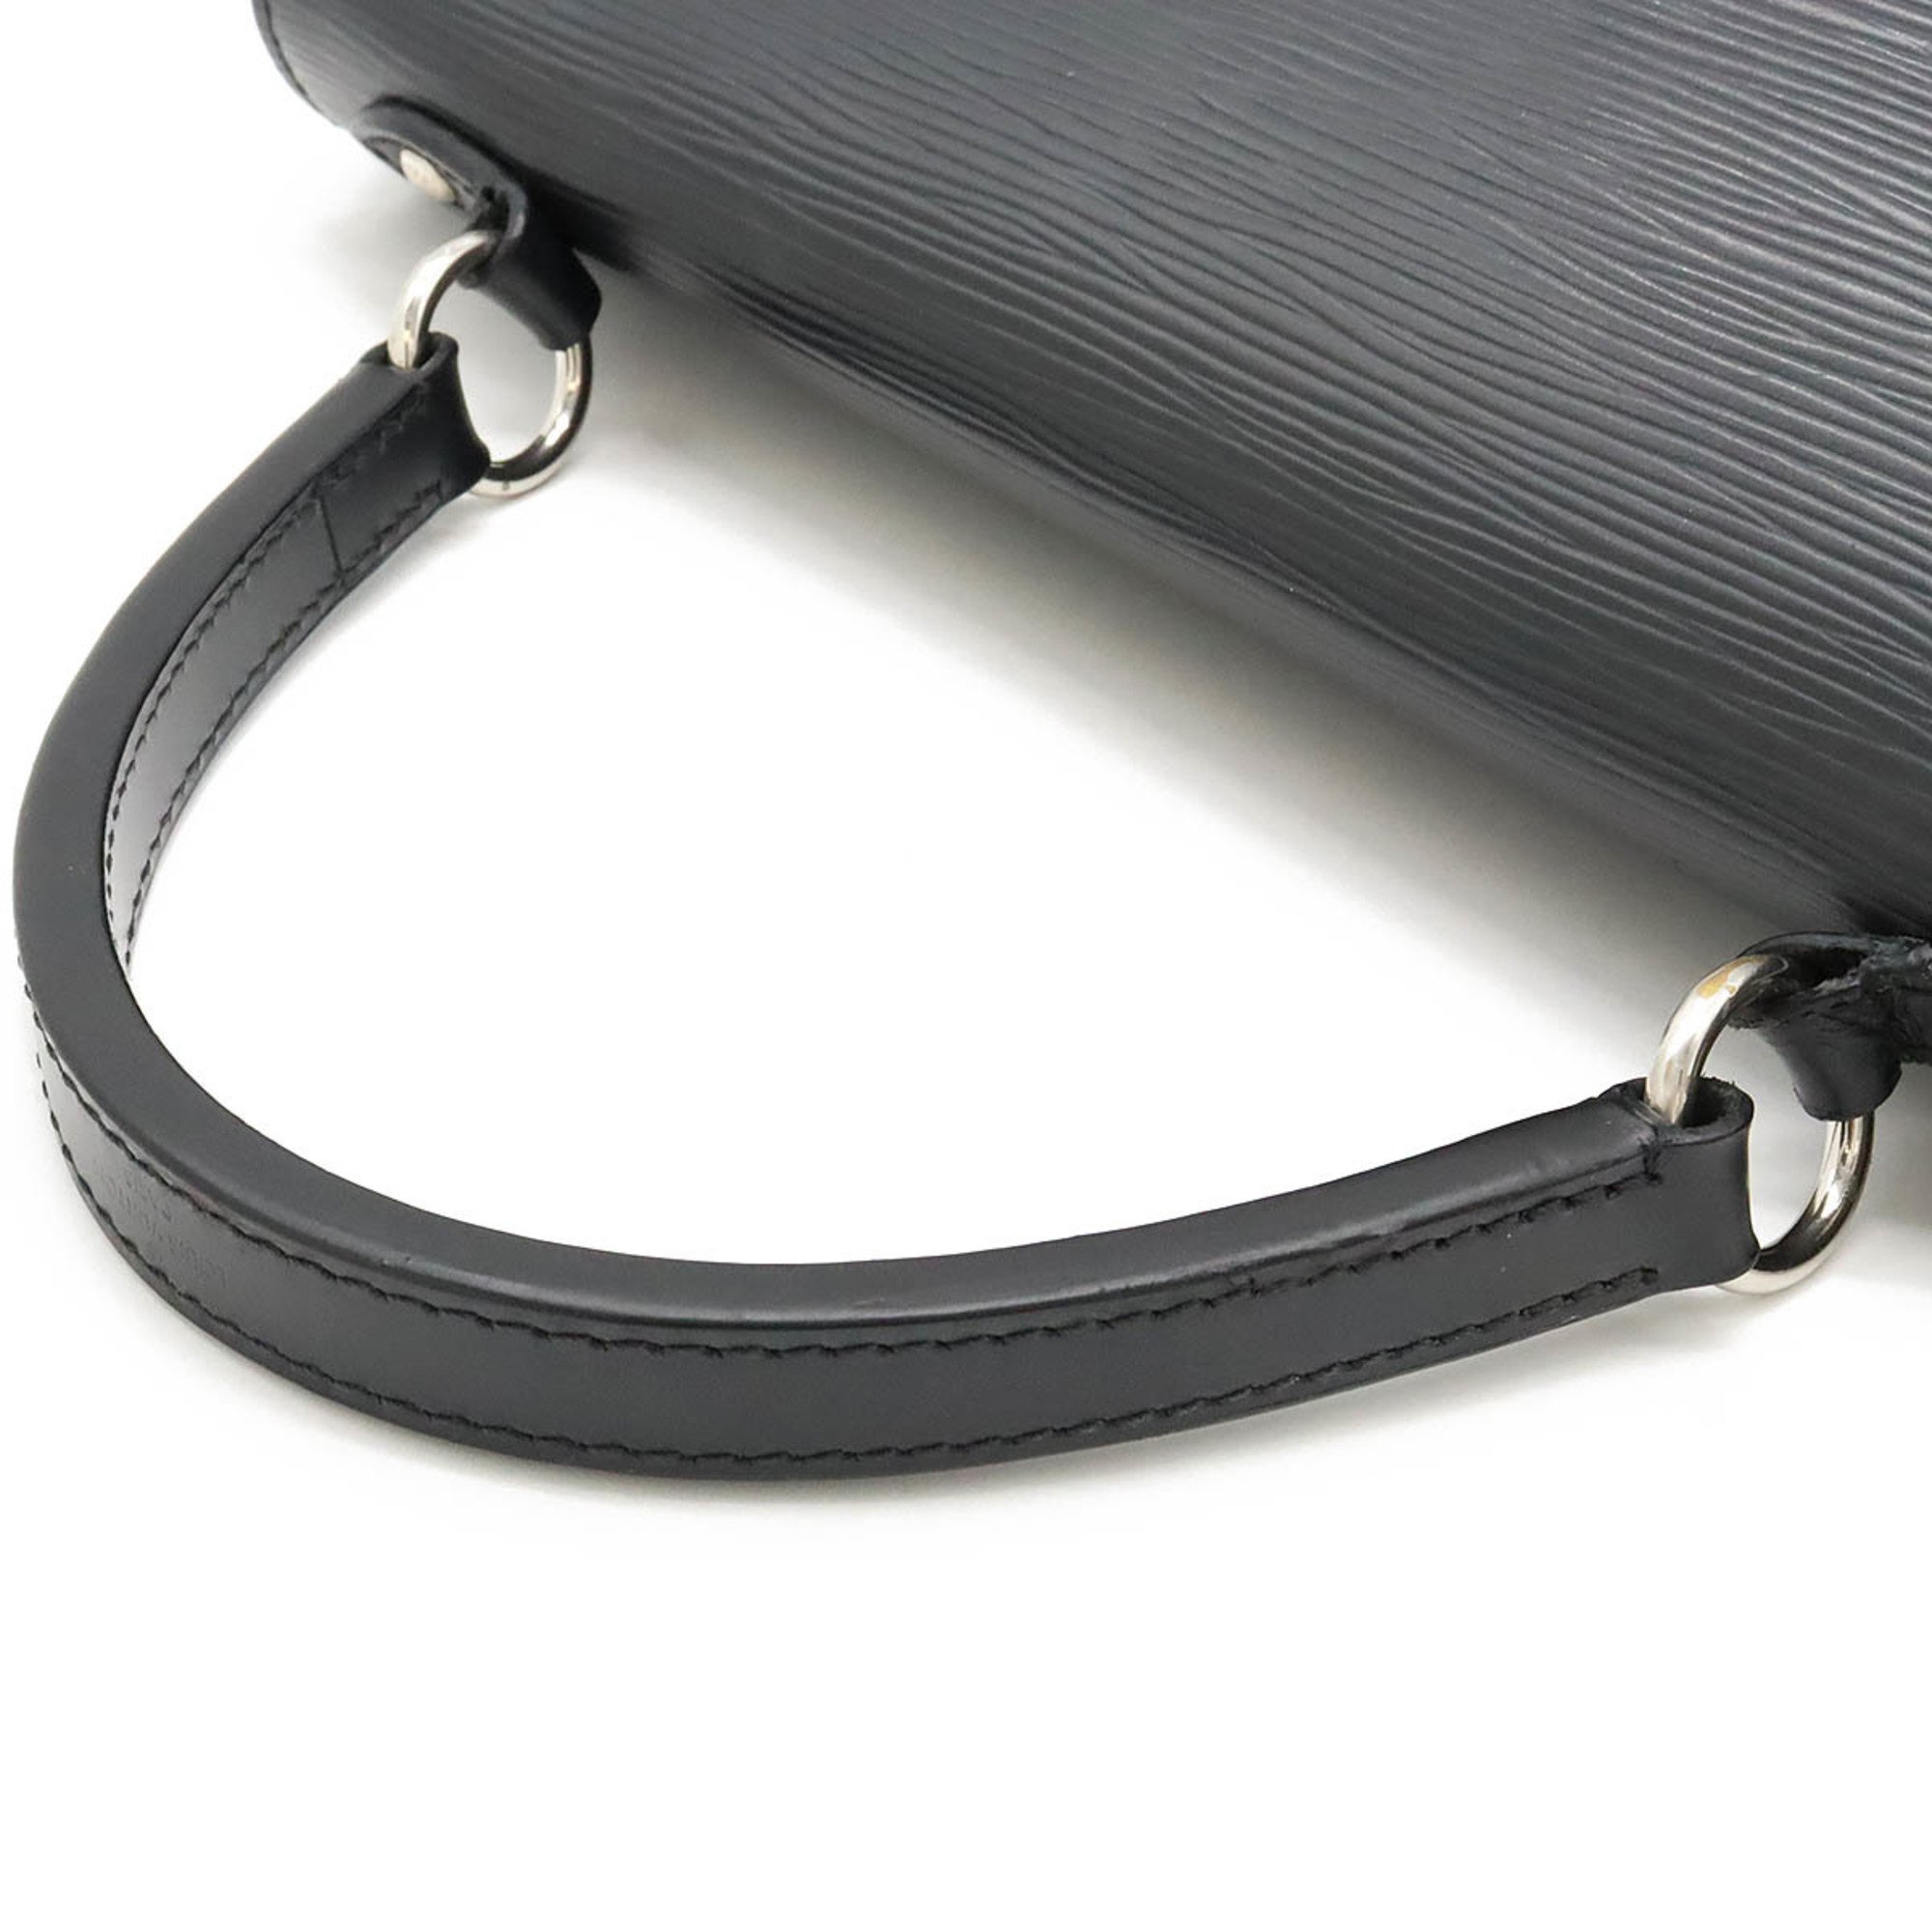 LOUIS VUITTON Epi Cluny MM Handbag Shoulder Bag Leather Noir Black M41302